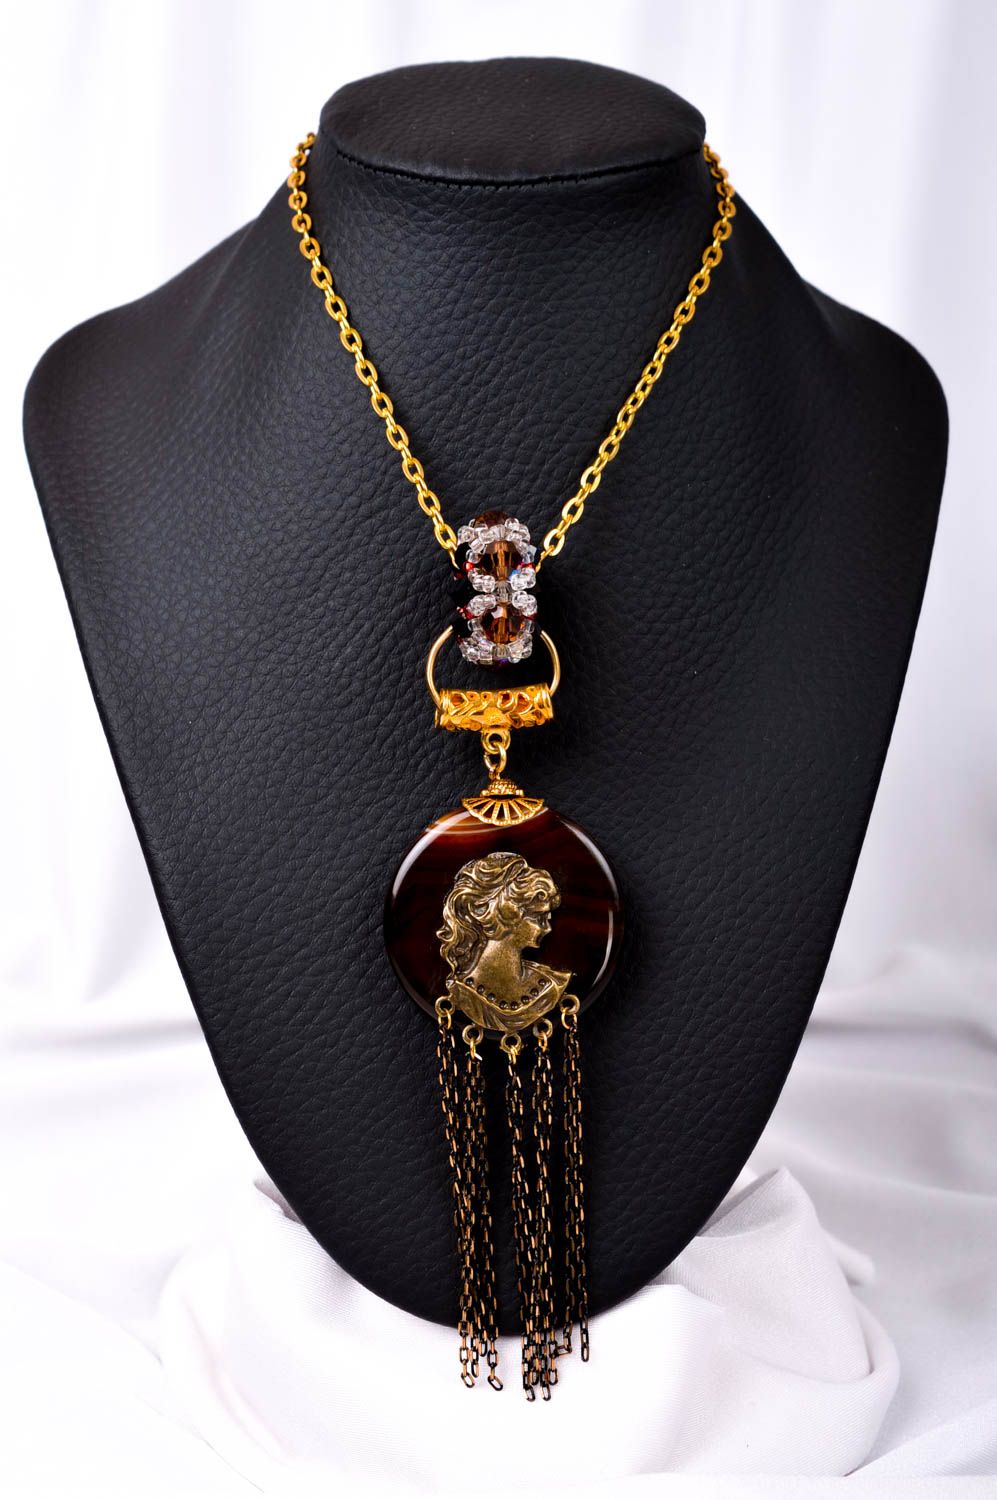 Handmade pendant designer accessory unusual gift ideas beads pendant for her photo 1